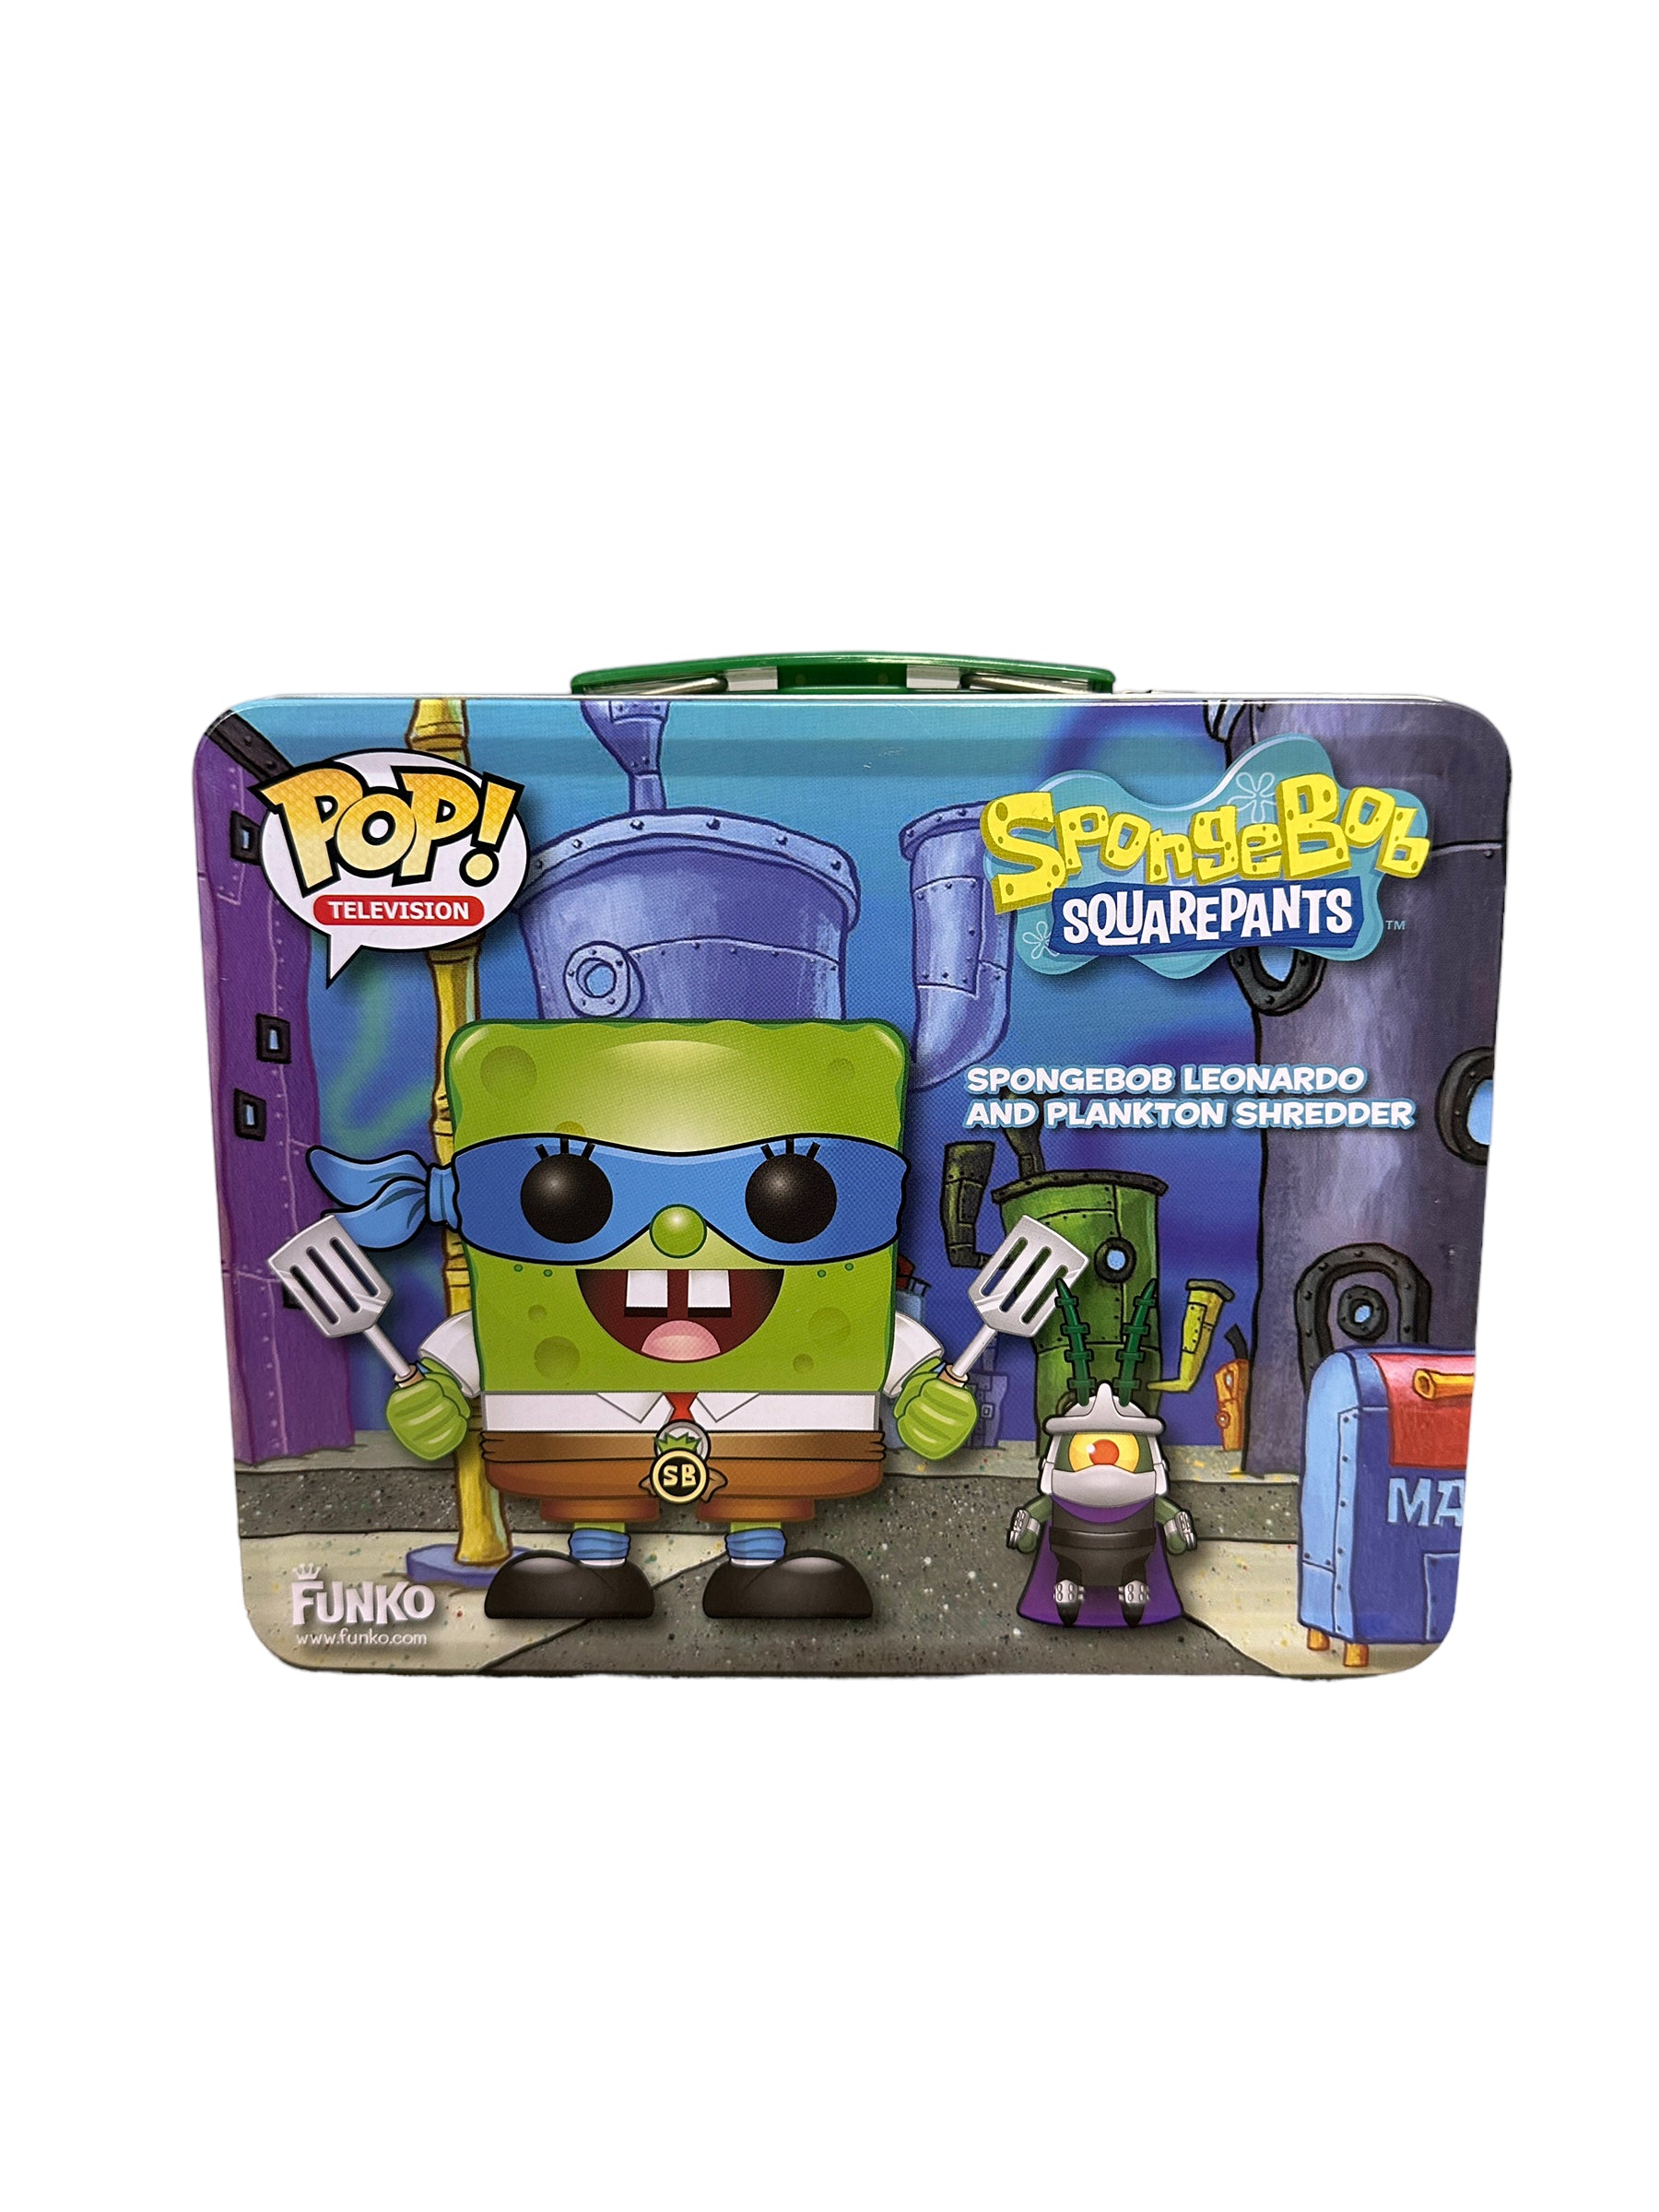 Spongebob Leonardo and Plankton Shredder #01 Funko Pop Lunchbox Tin! - Spongebob Squarepants x Teenage Mutant Ninja Turtles - SDCC 2014 Exclusive LE1000 Pcs - Condition 8/10